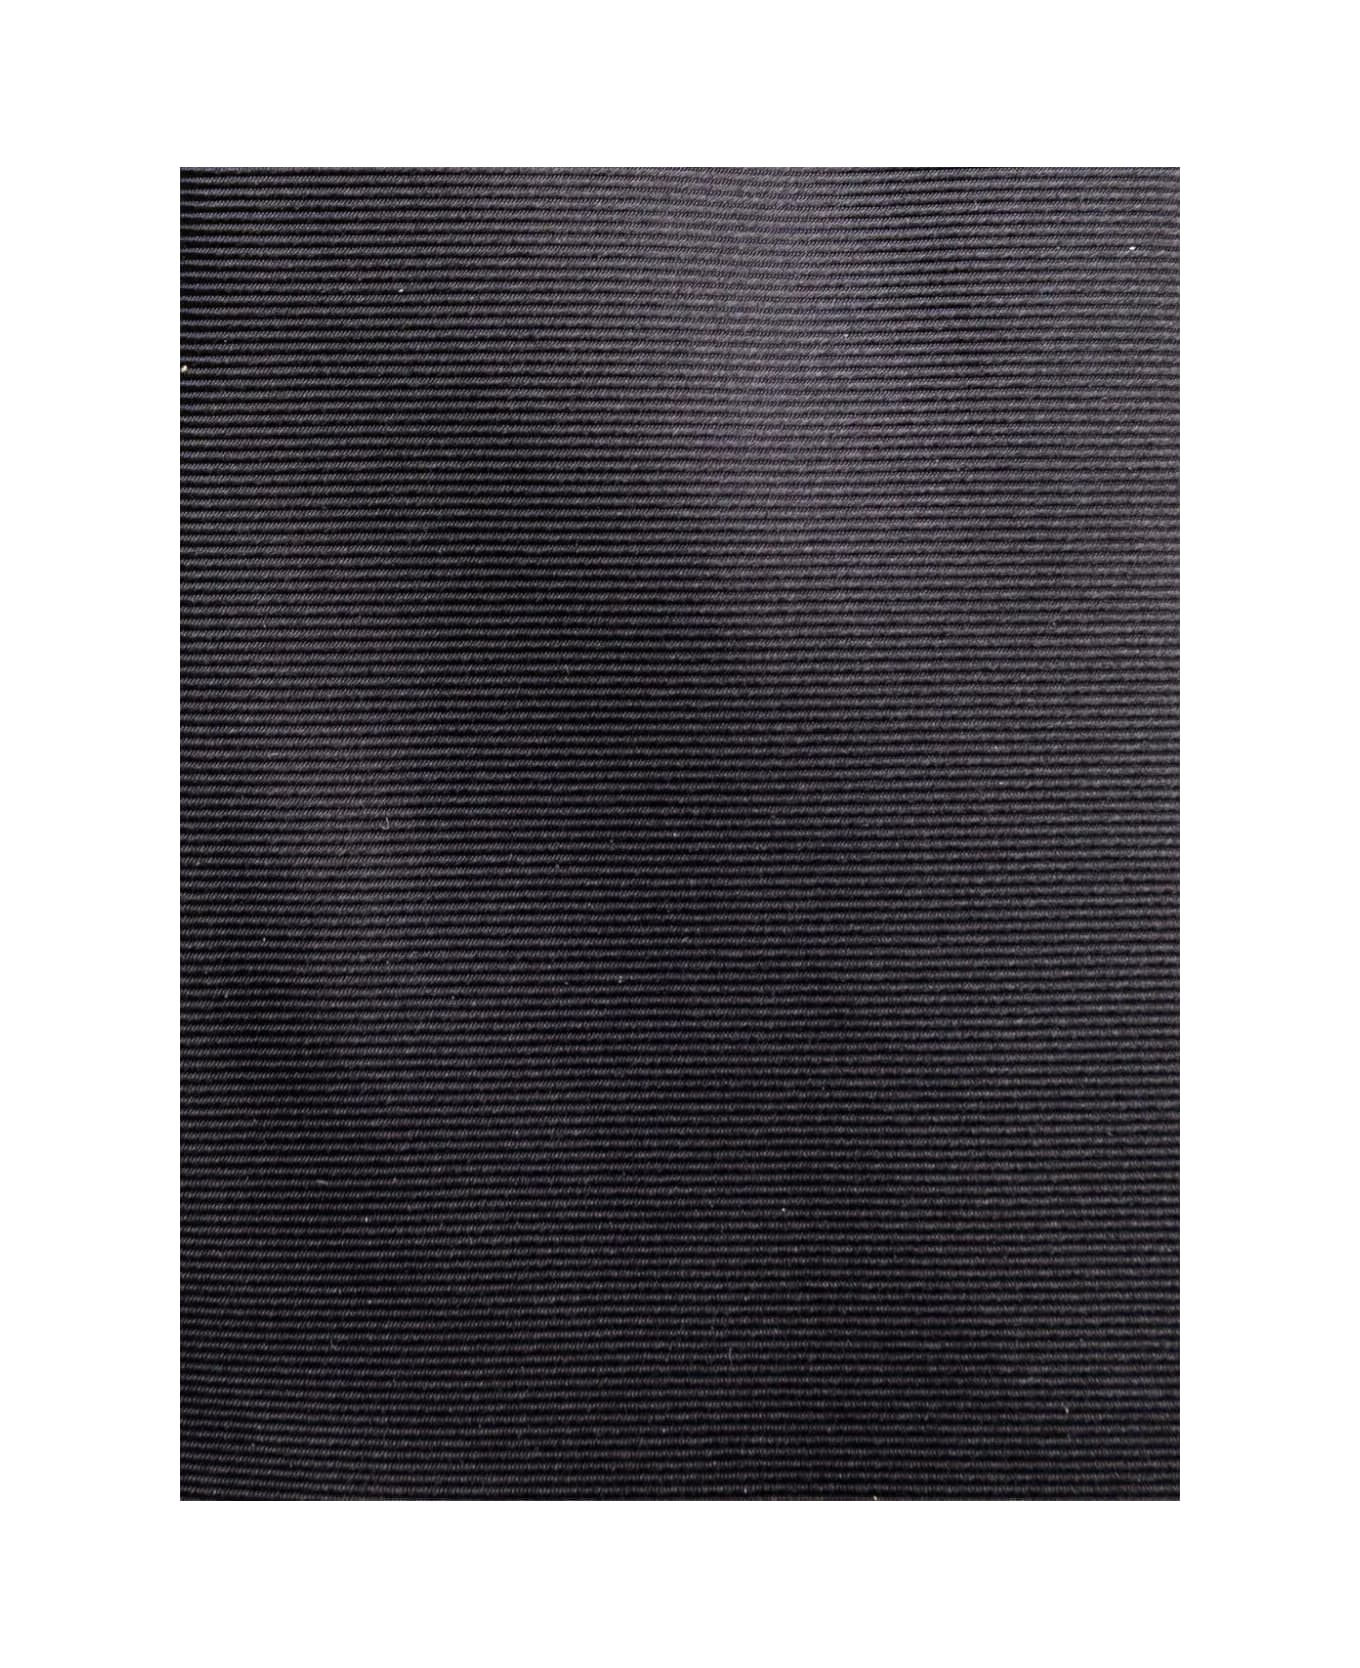 Emporio Armani Woven Jacquard Tie - Black